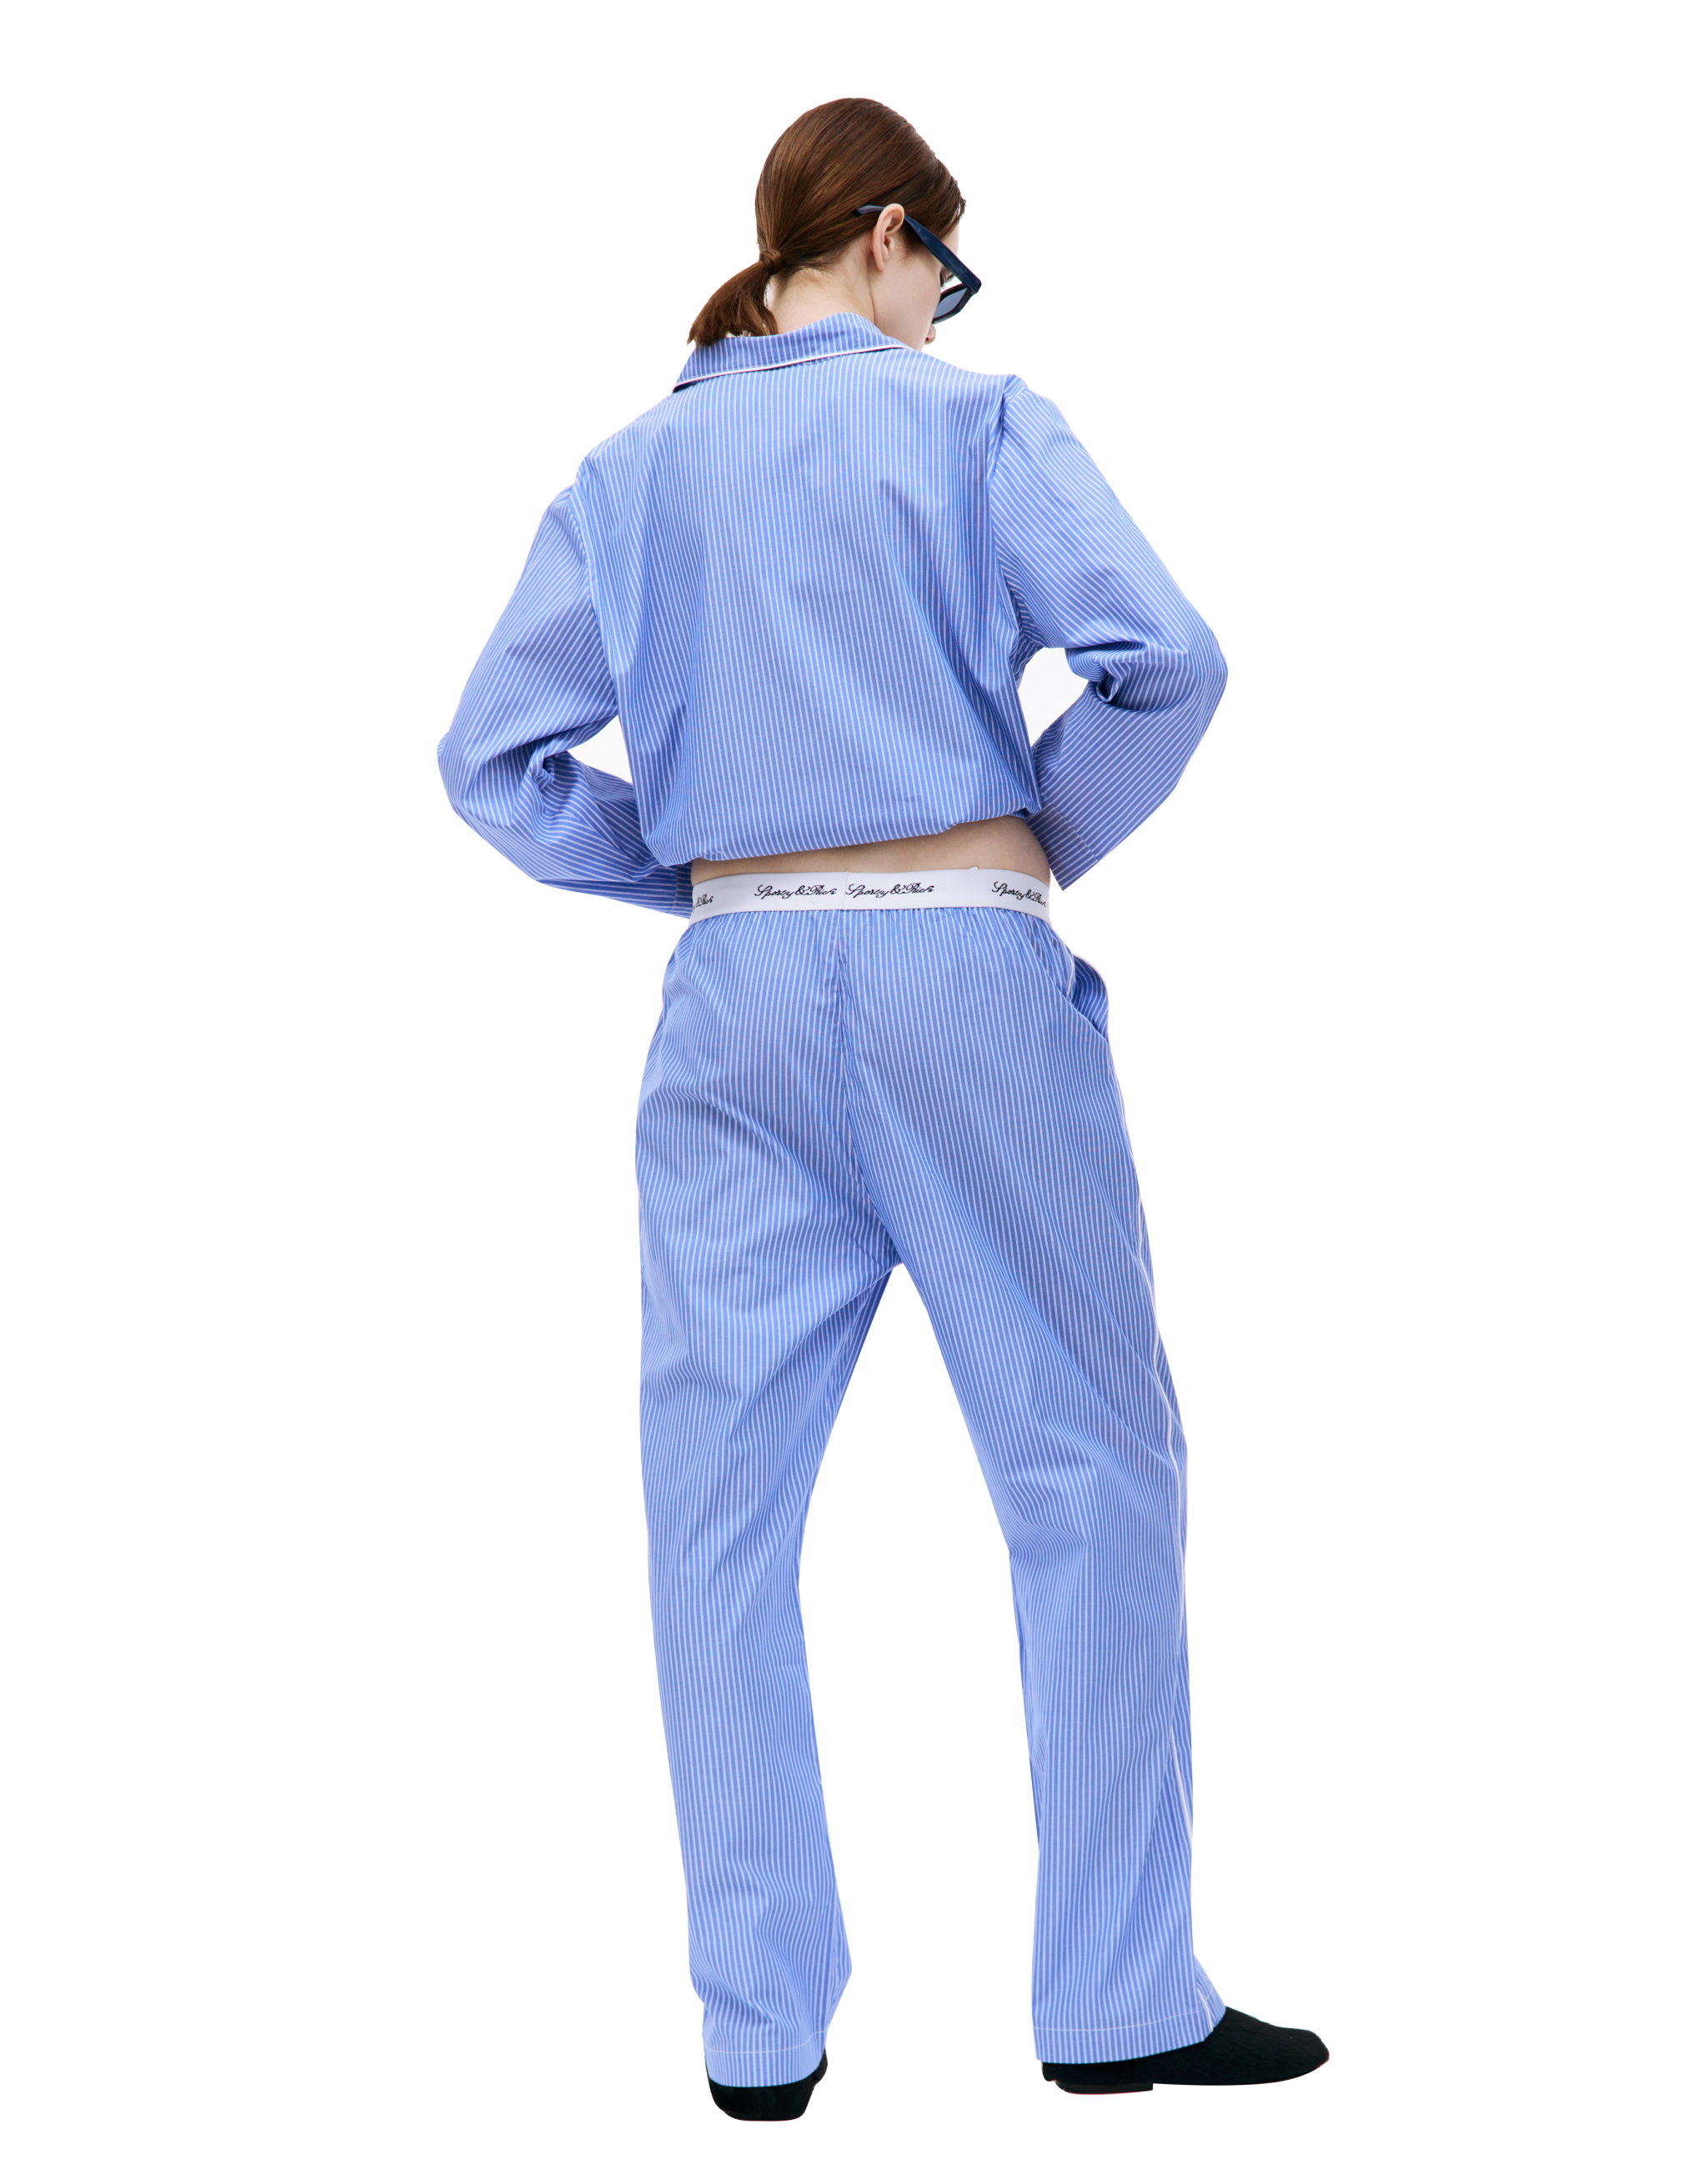 Пижамные брюки в полоску SPORTY & RICH PJAW236BL, размер S;M;L;XL - фото 3